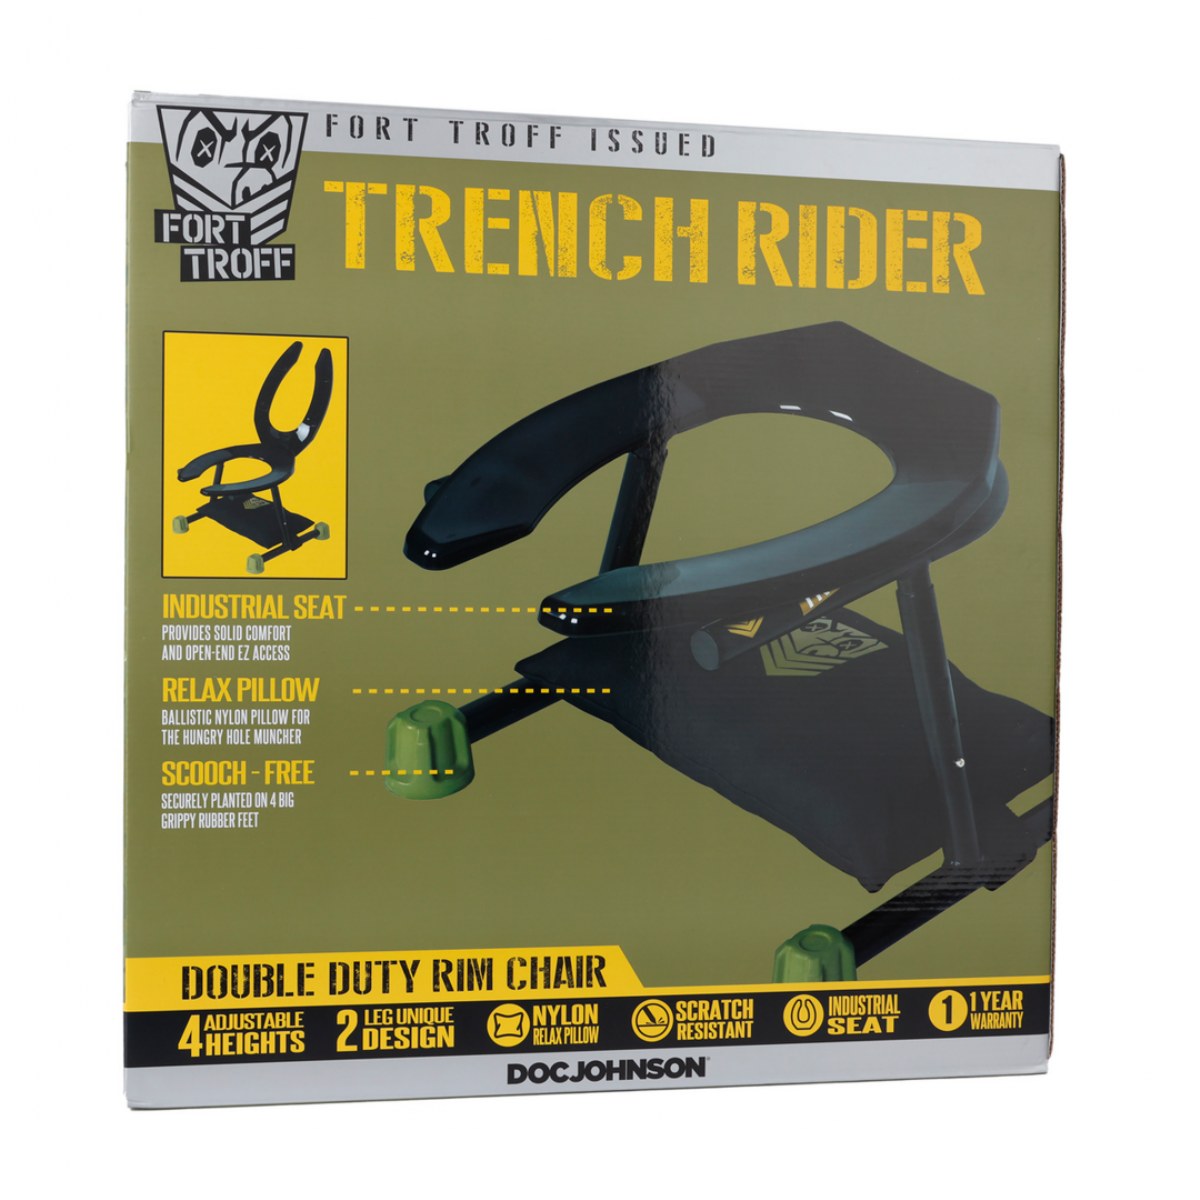 Trench rider (Koninginnen stoel)